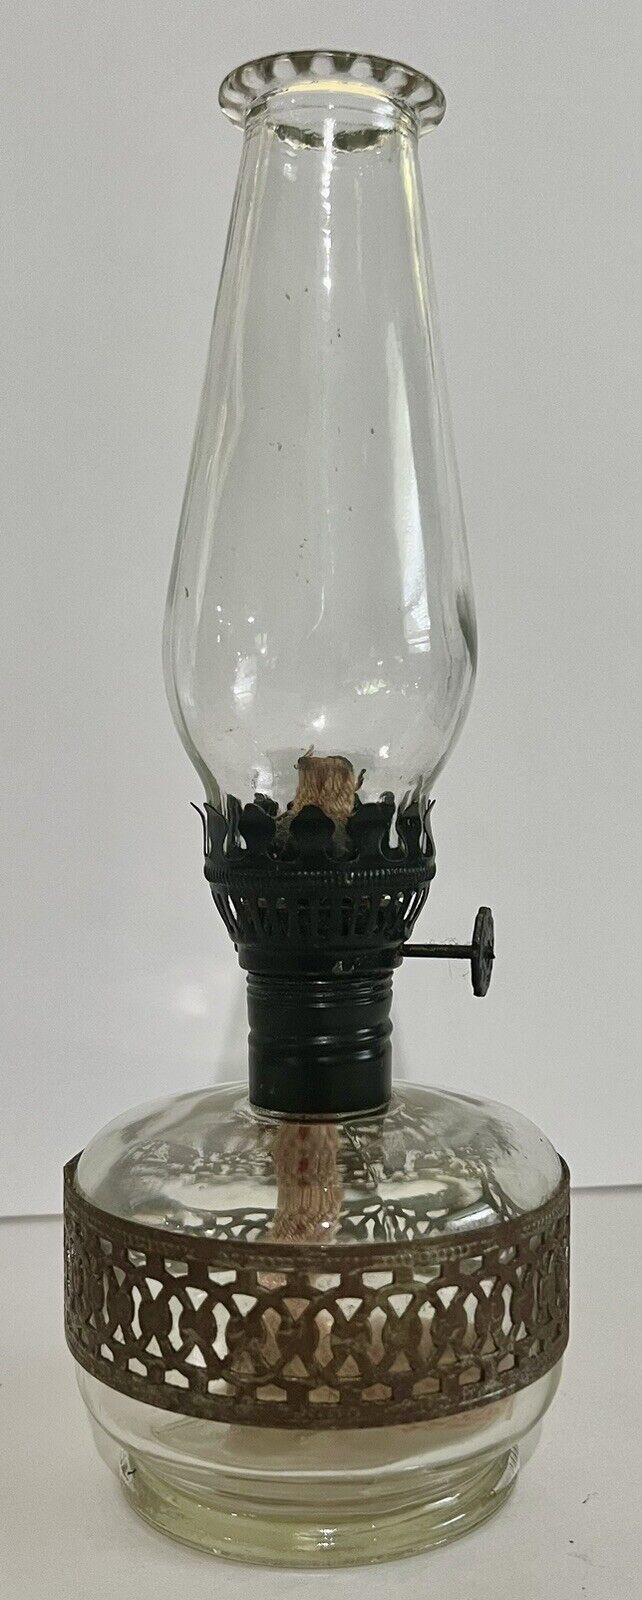 VTG Miniature Glass Oil Lamp Decorative Metal Band Lamplight Farms GrannyCore 8”